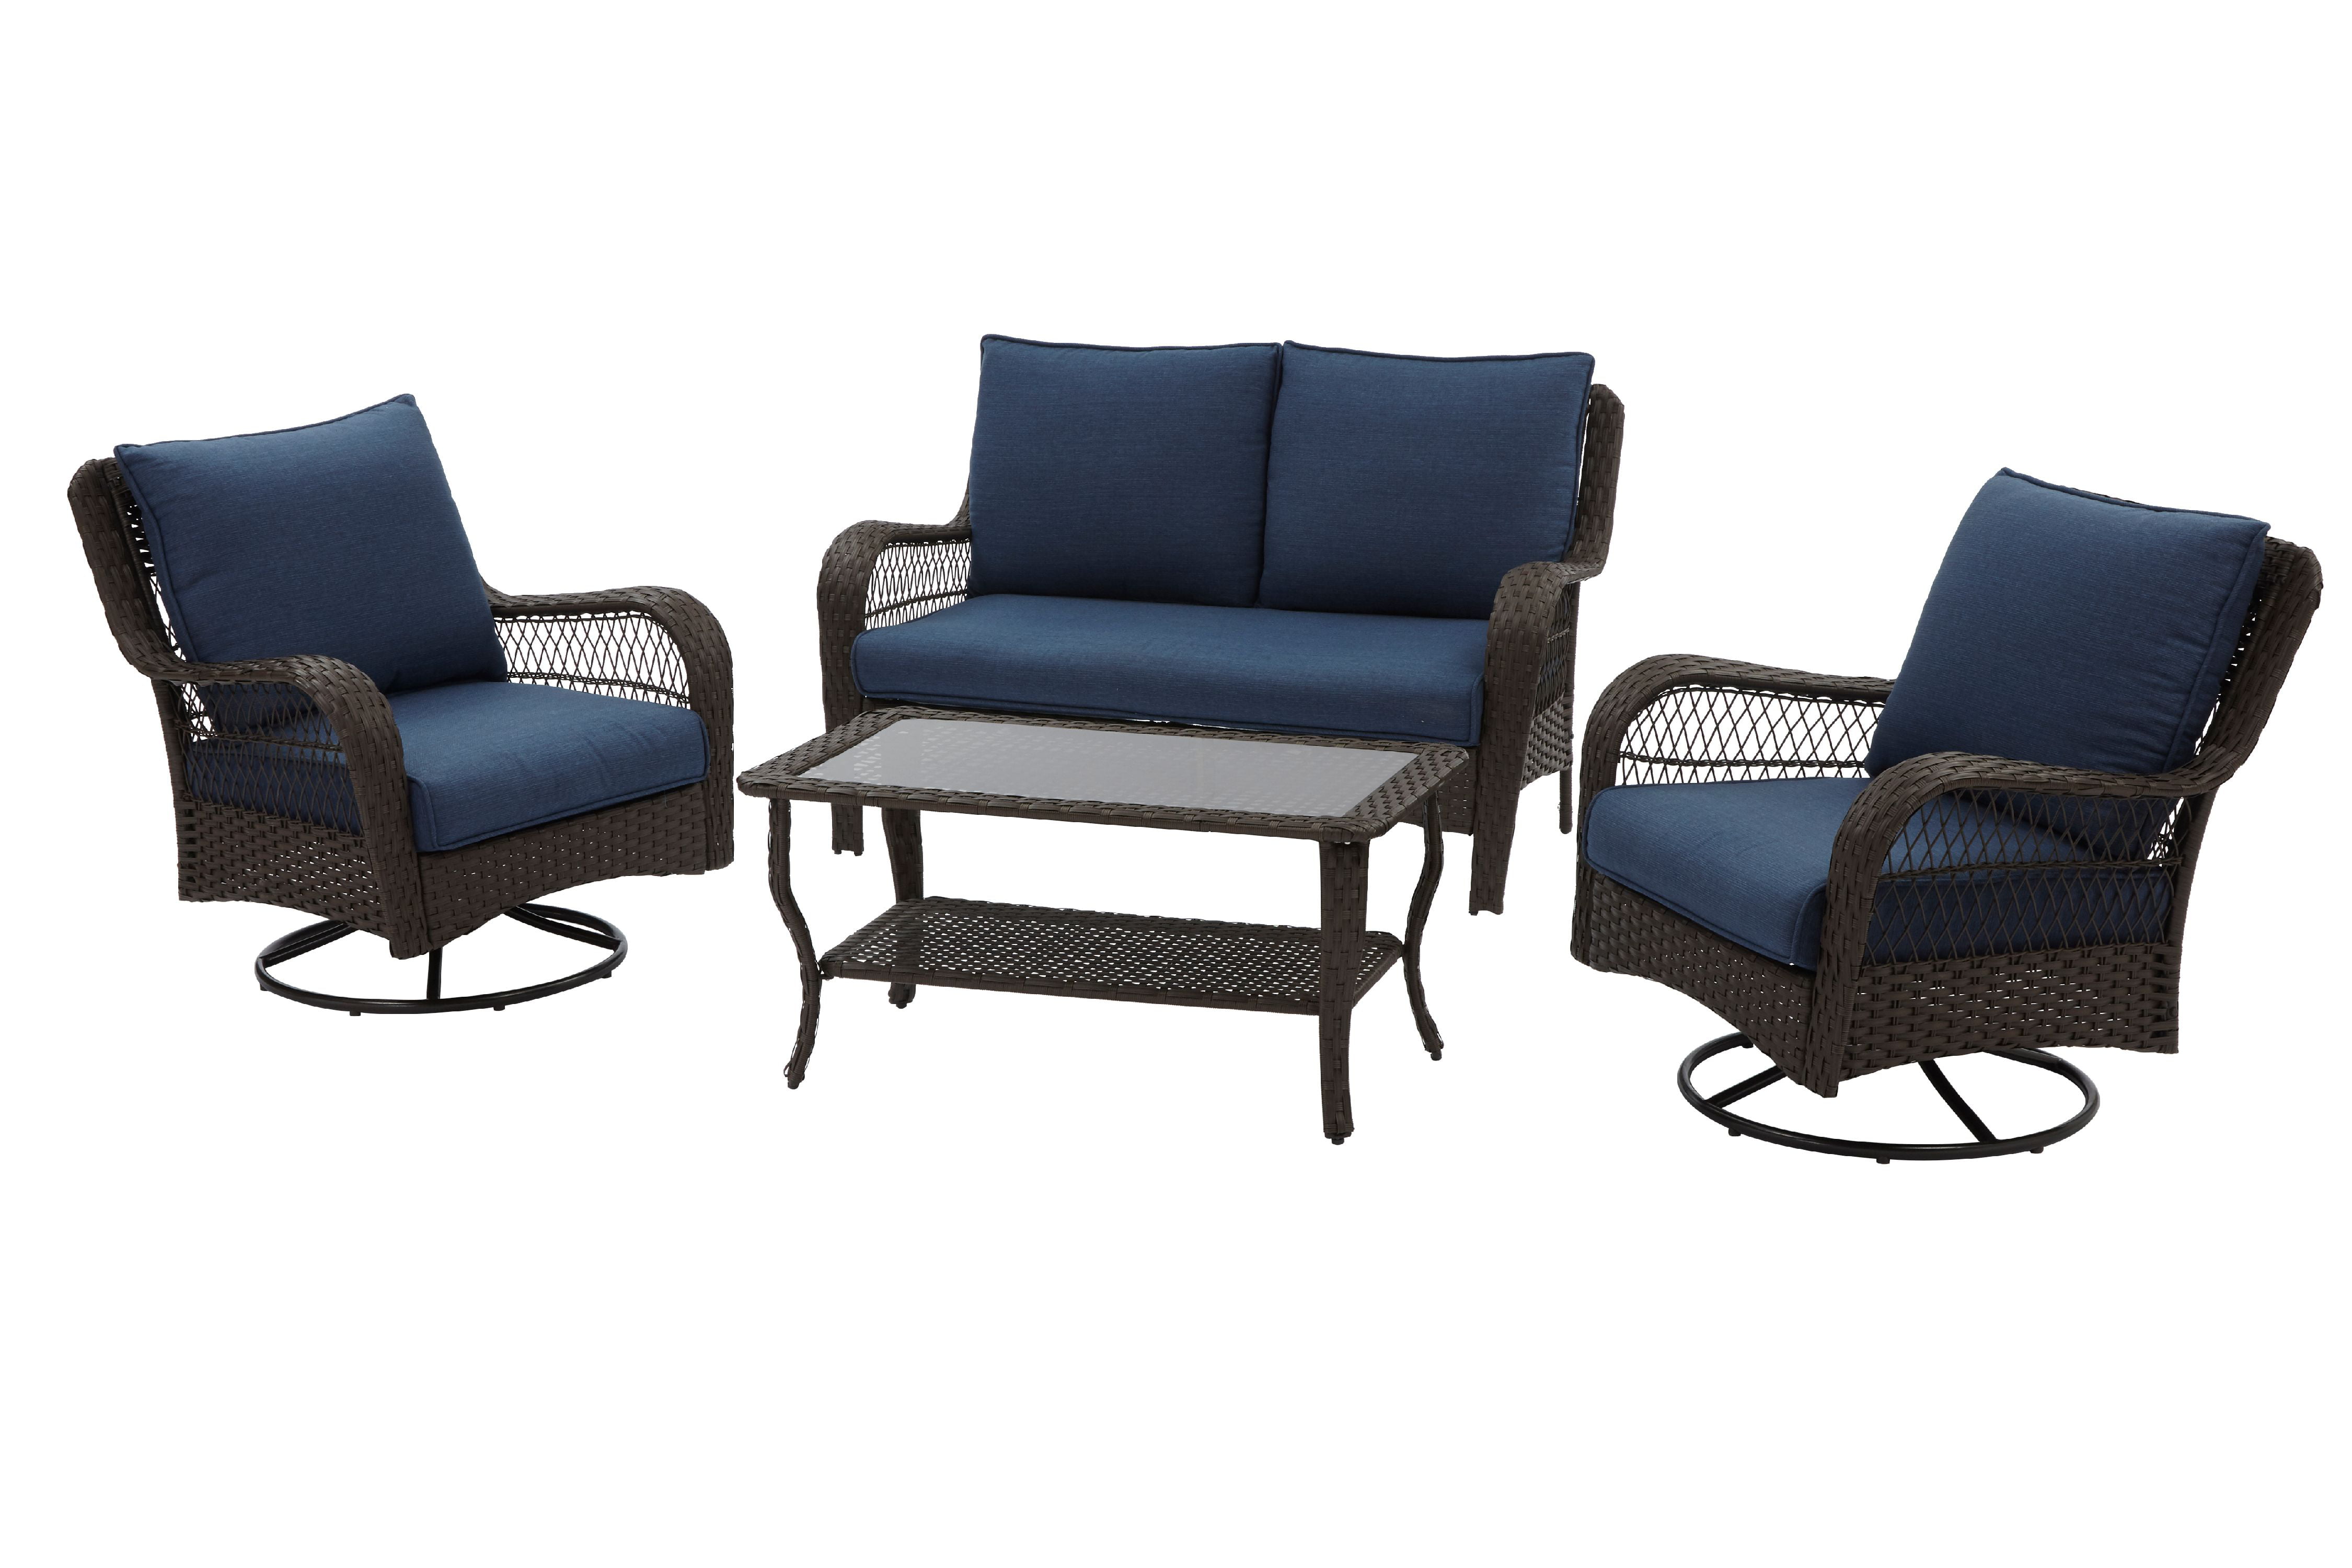 Wicker Patio Furniture Conversation Set, Wicker Patio Furniture Set With Swivel Chairs